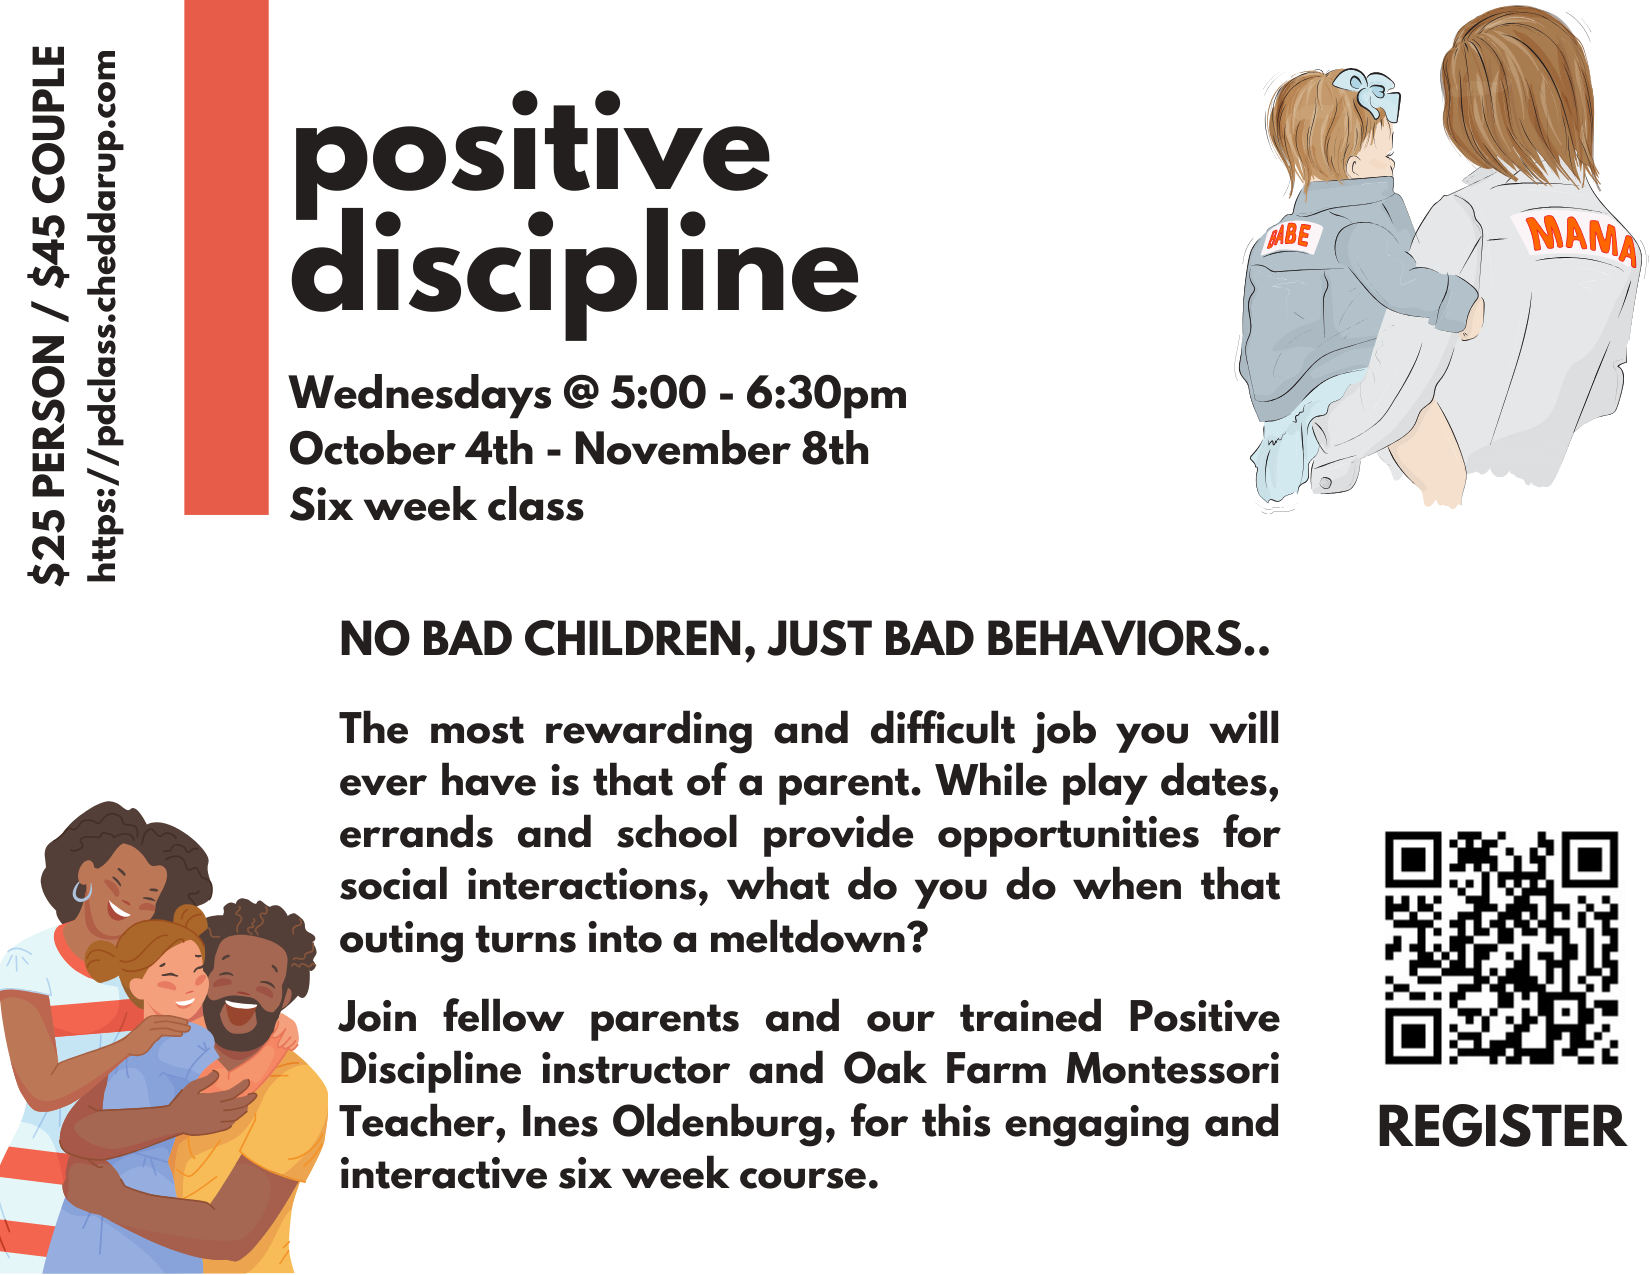 Advertisement for positive discipline class